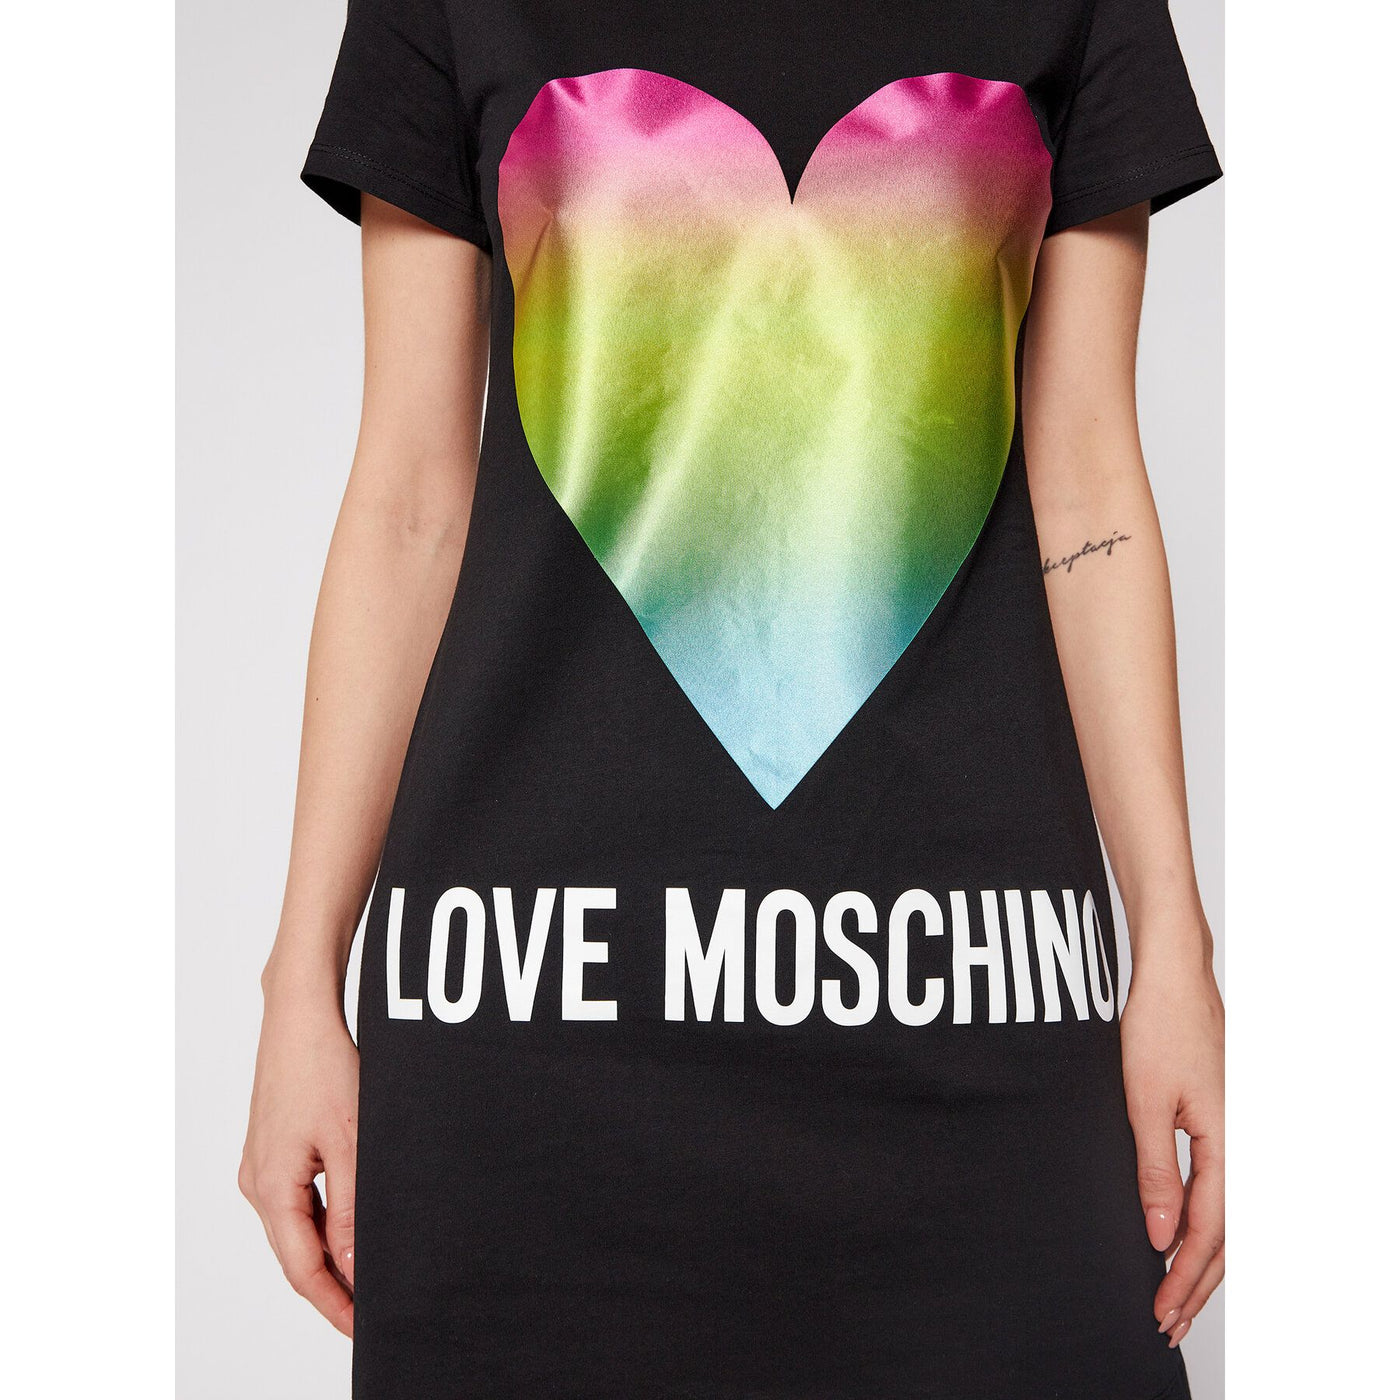 Love Moschino Black Cotton Dress